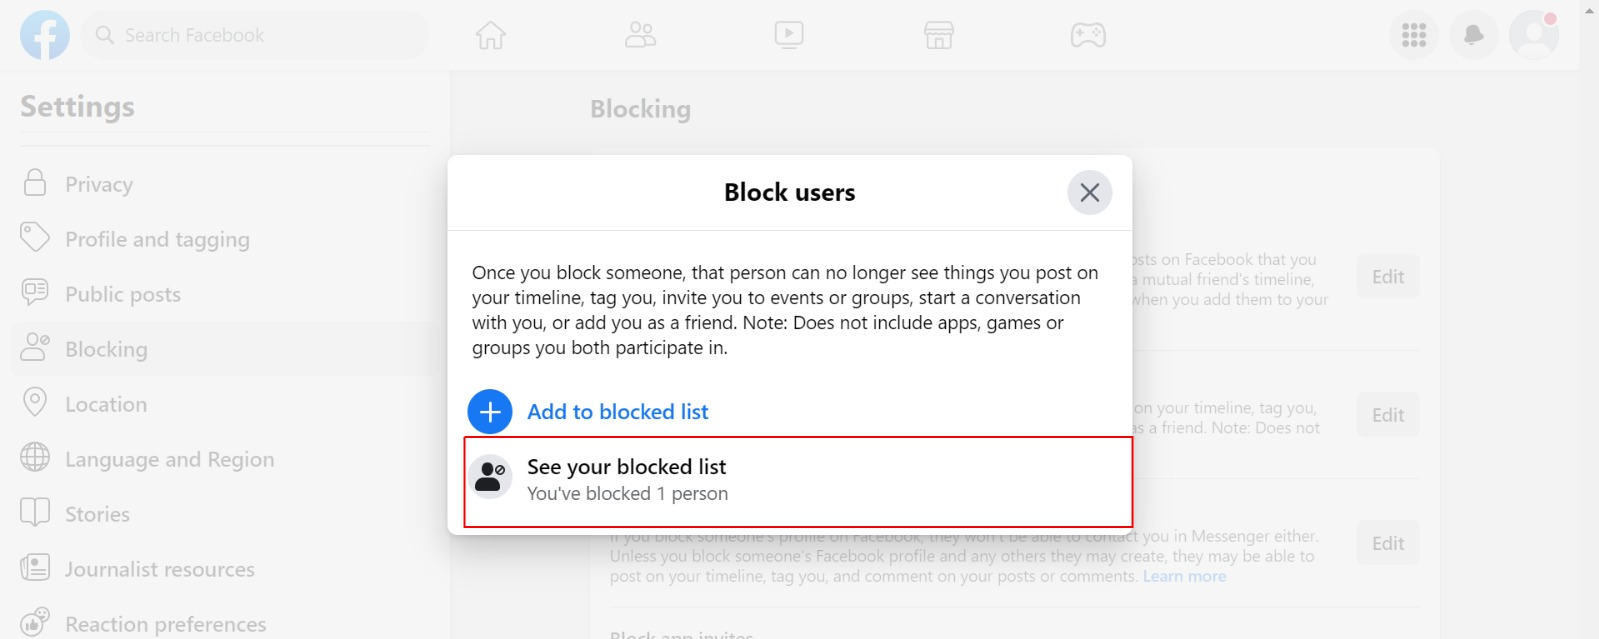 https://fbpassport.com/view-blocked-facebook-list-unblock-facebook-friends-see-blocked-list-fb/